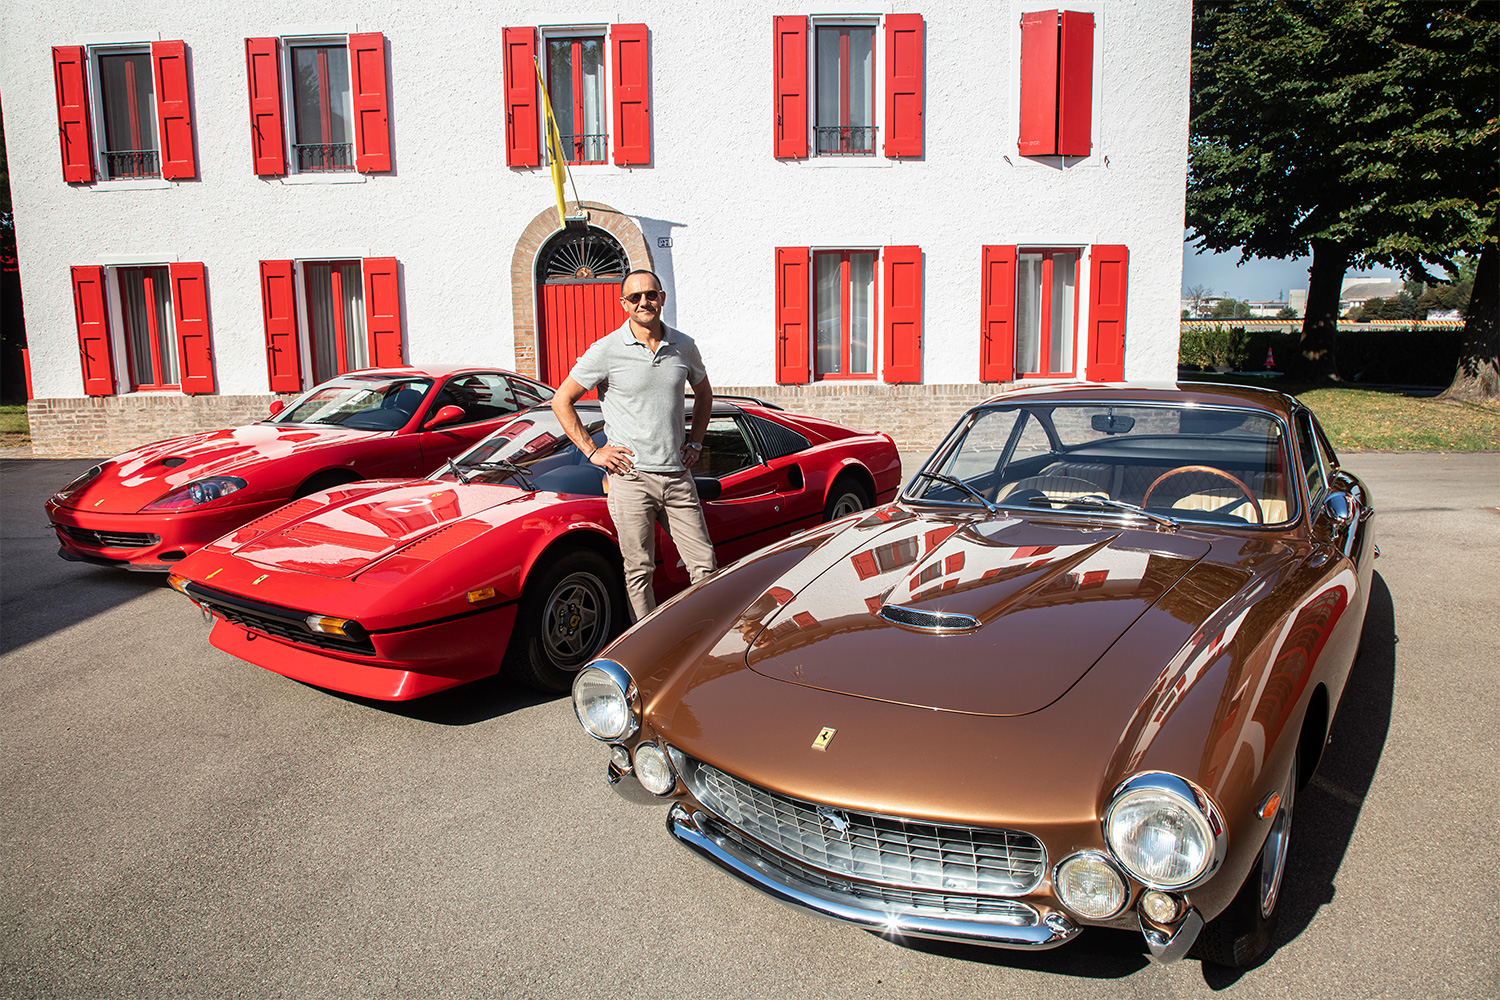 InsideHook writer Basem Wasef with the three classic Ferraris he drove as part of the Corso Pilota Classiche program